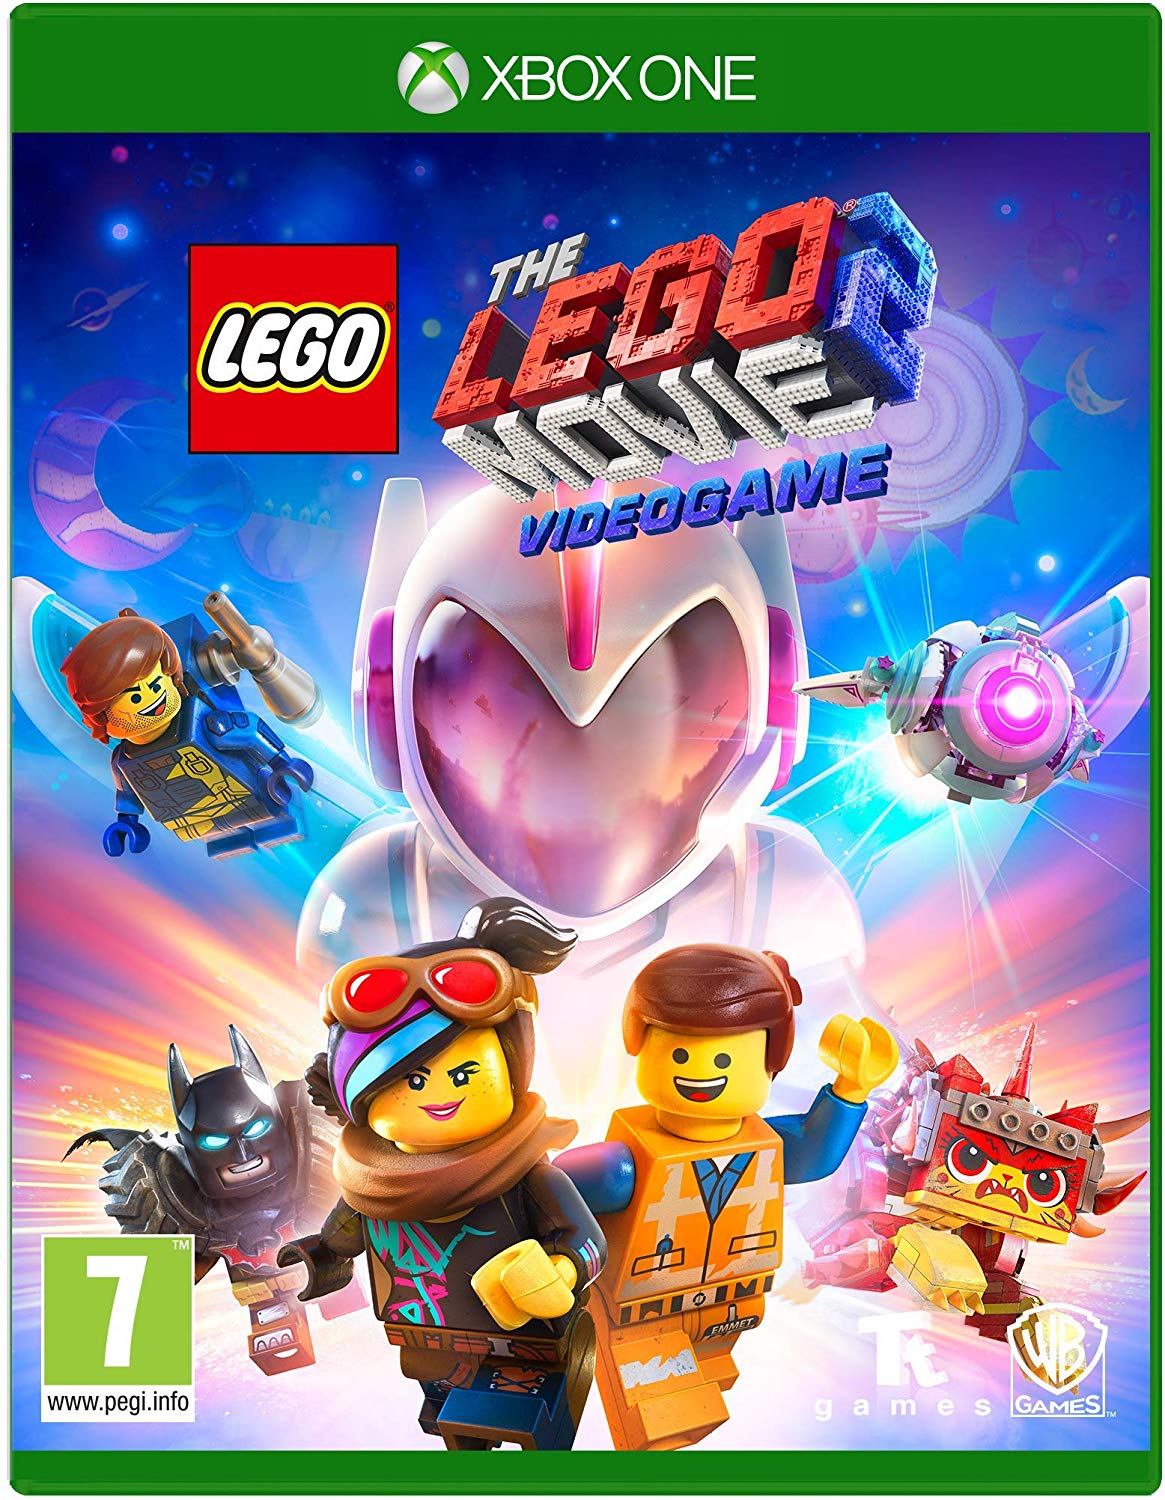 The LEGO Movie 2 Videogame Digital Download Key (Xbox One)